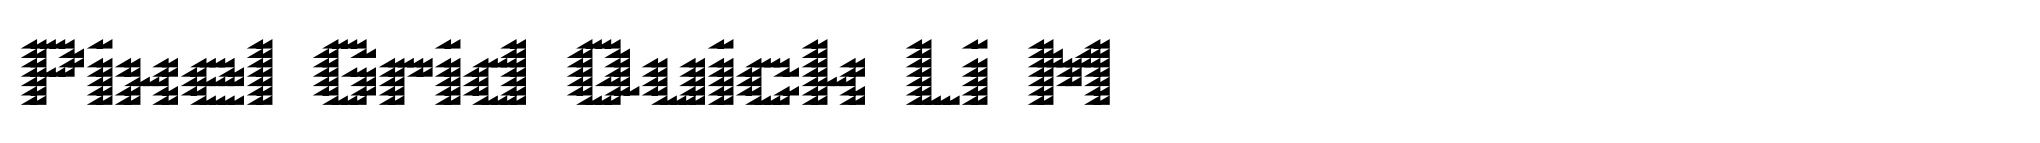 Pixel Grid Quick Li M image